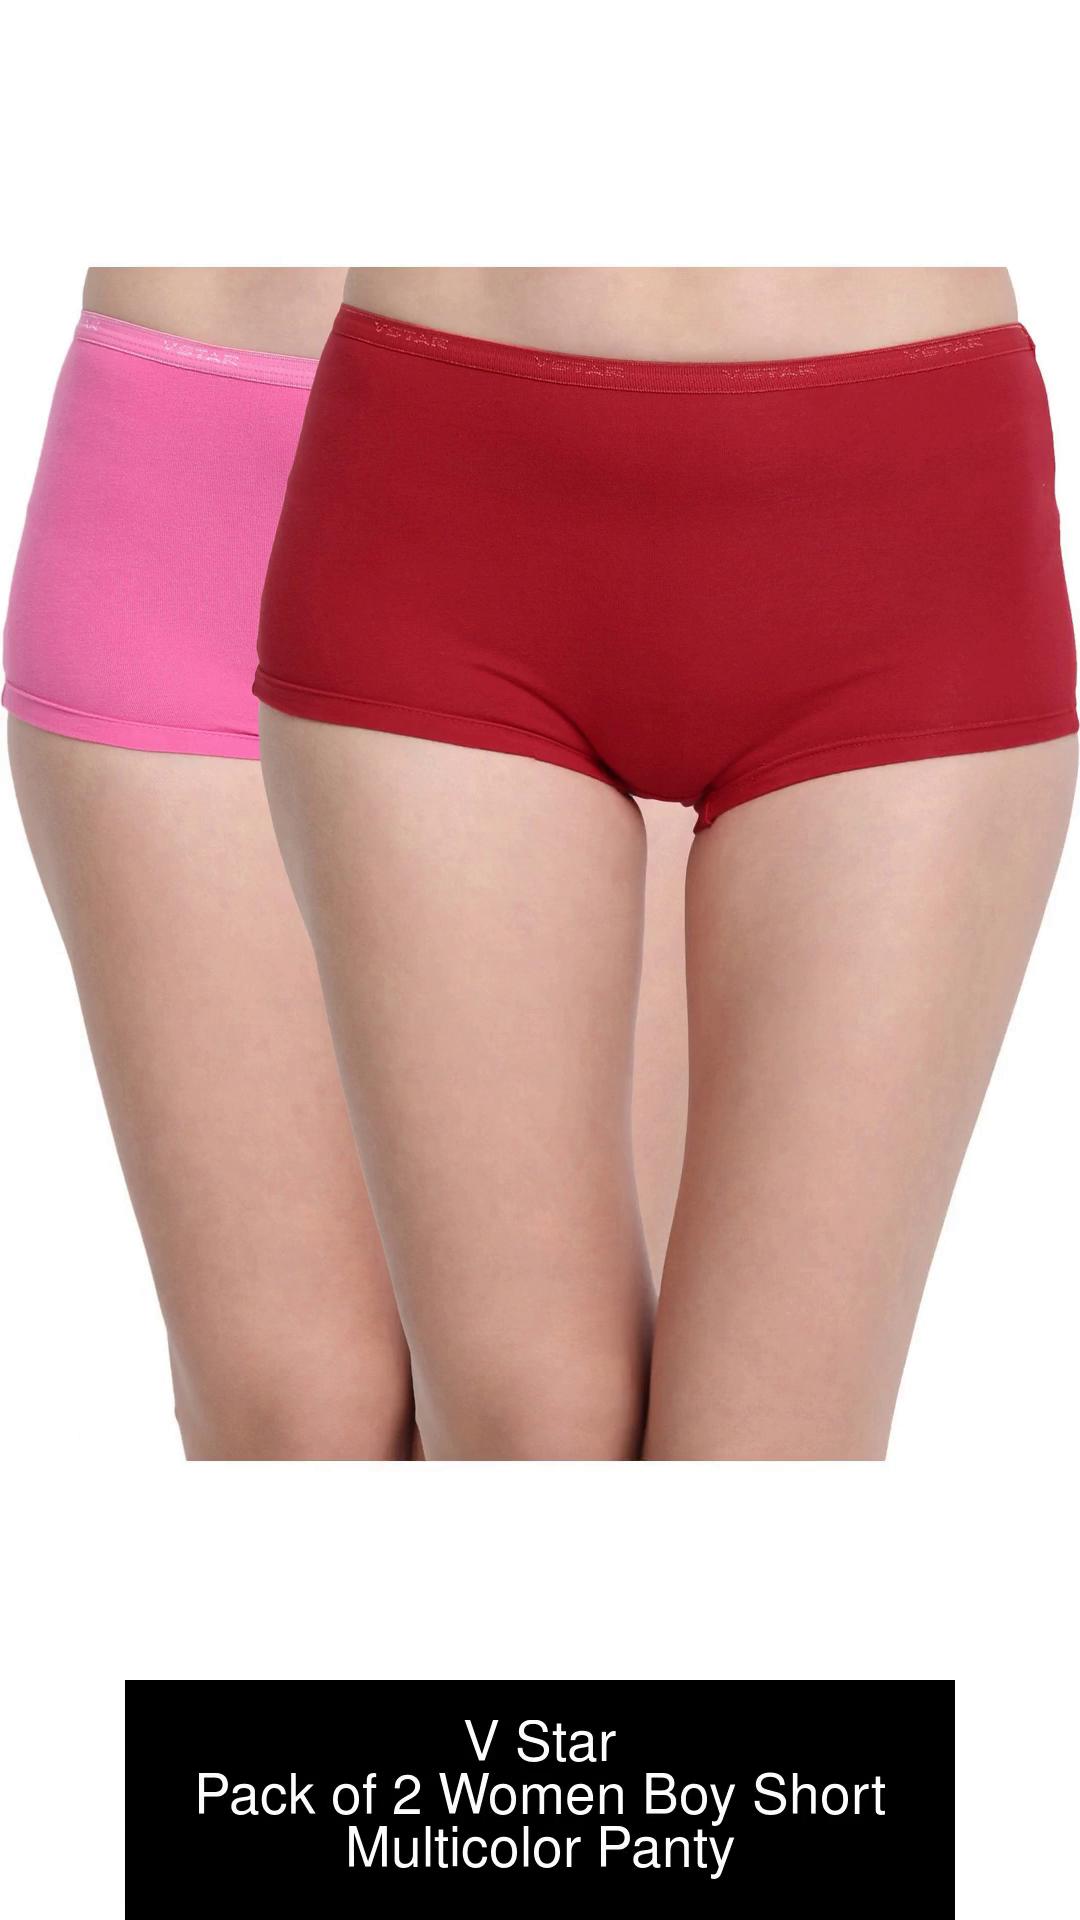 Flipkart boy shorts Review 🛍️, Flipkart panty review 🛍️, After Wash  review